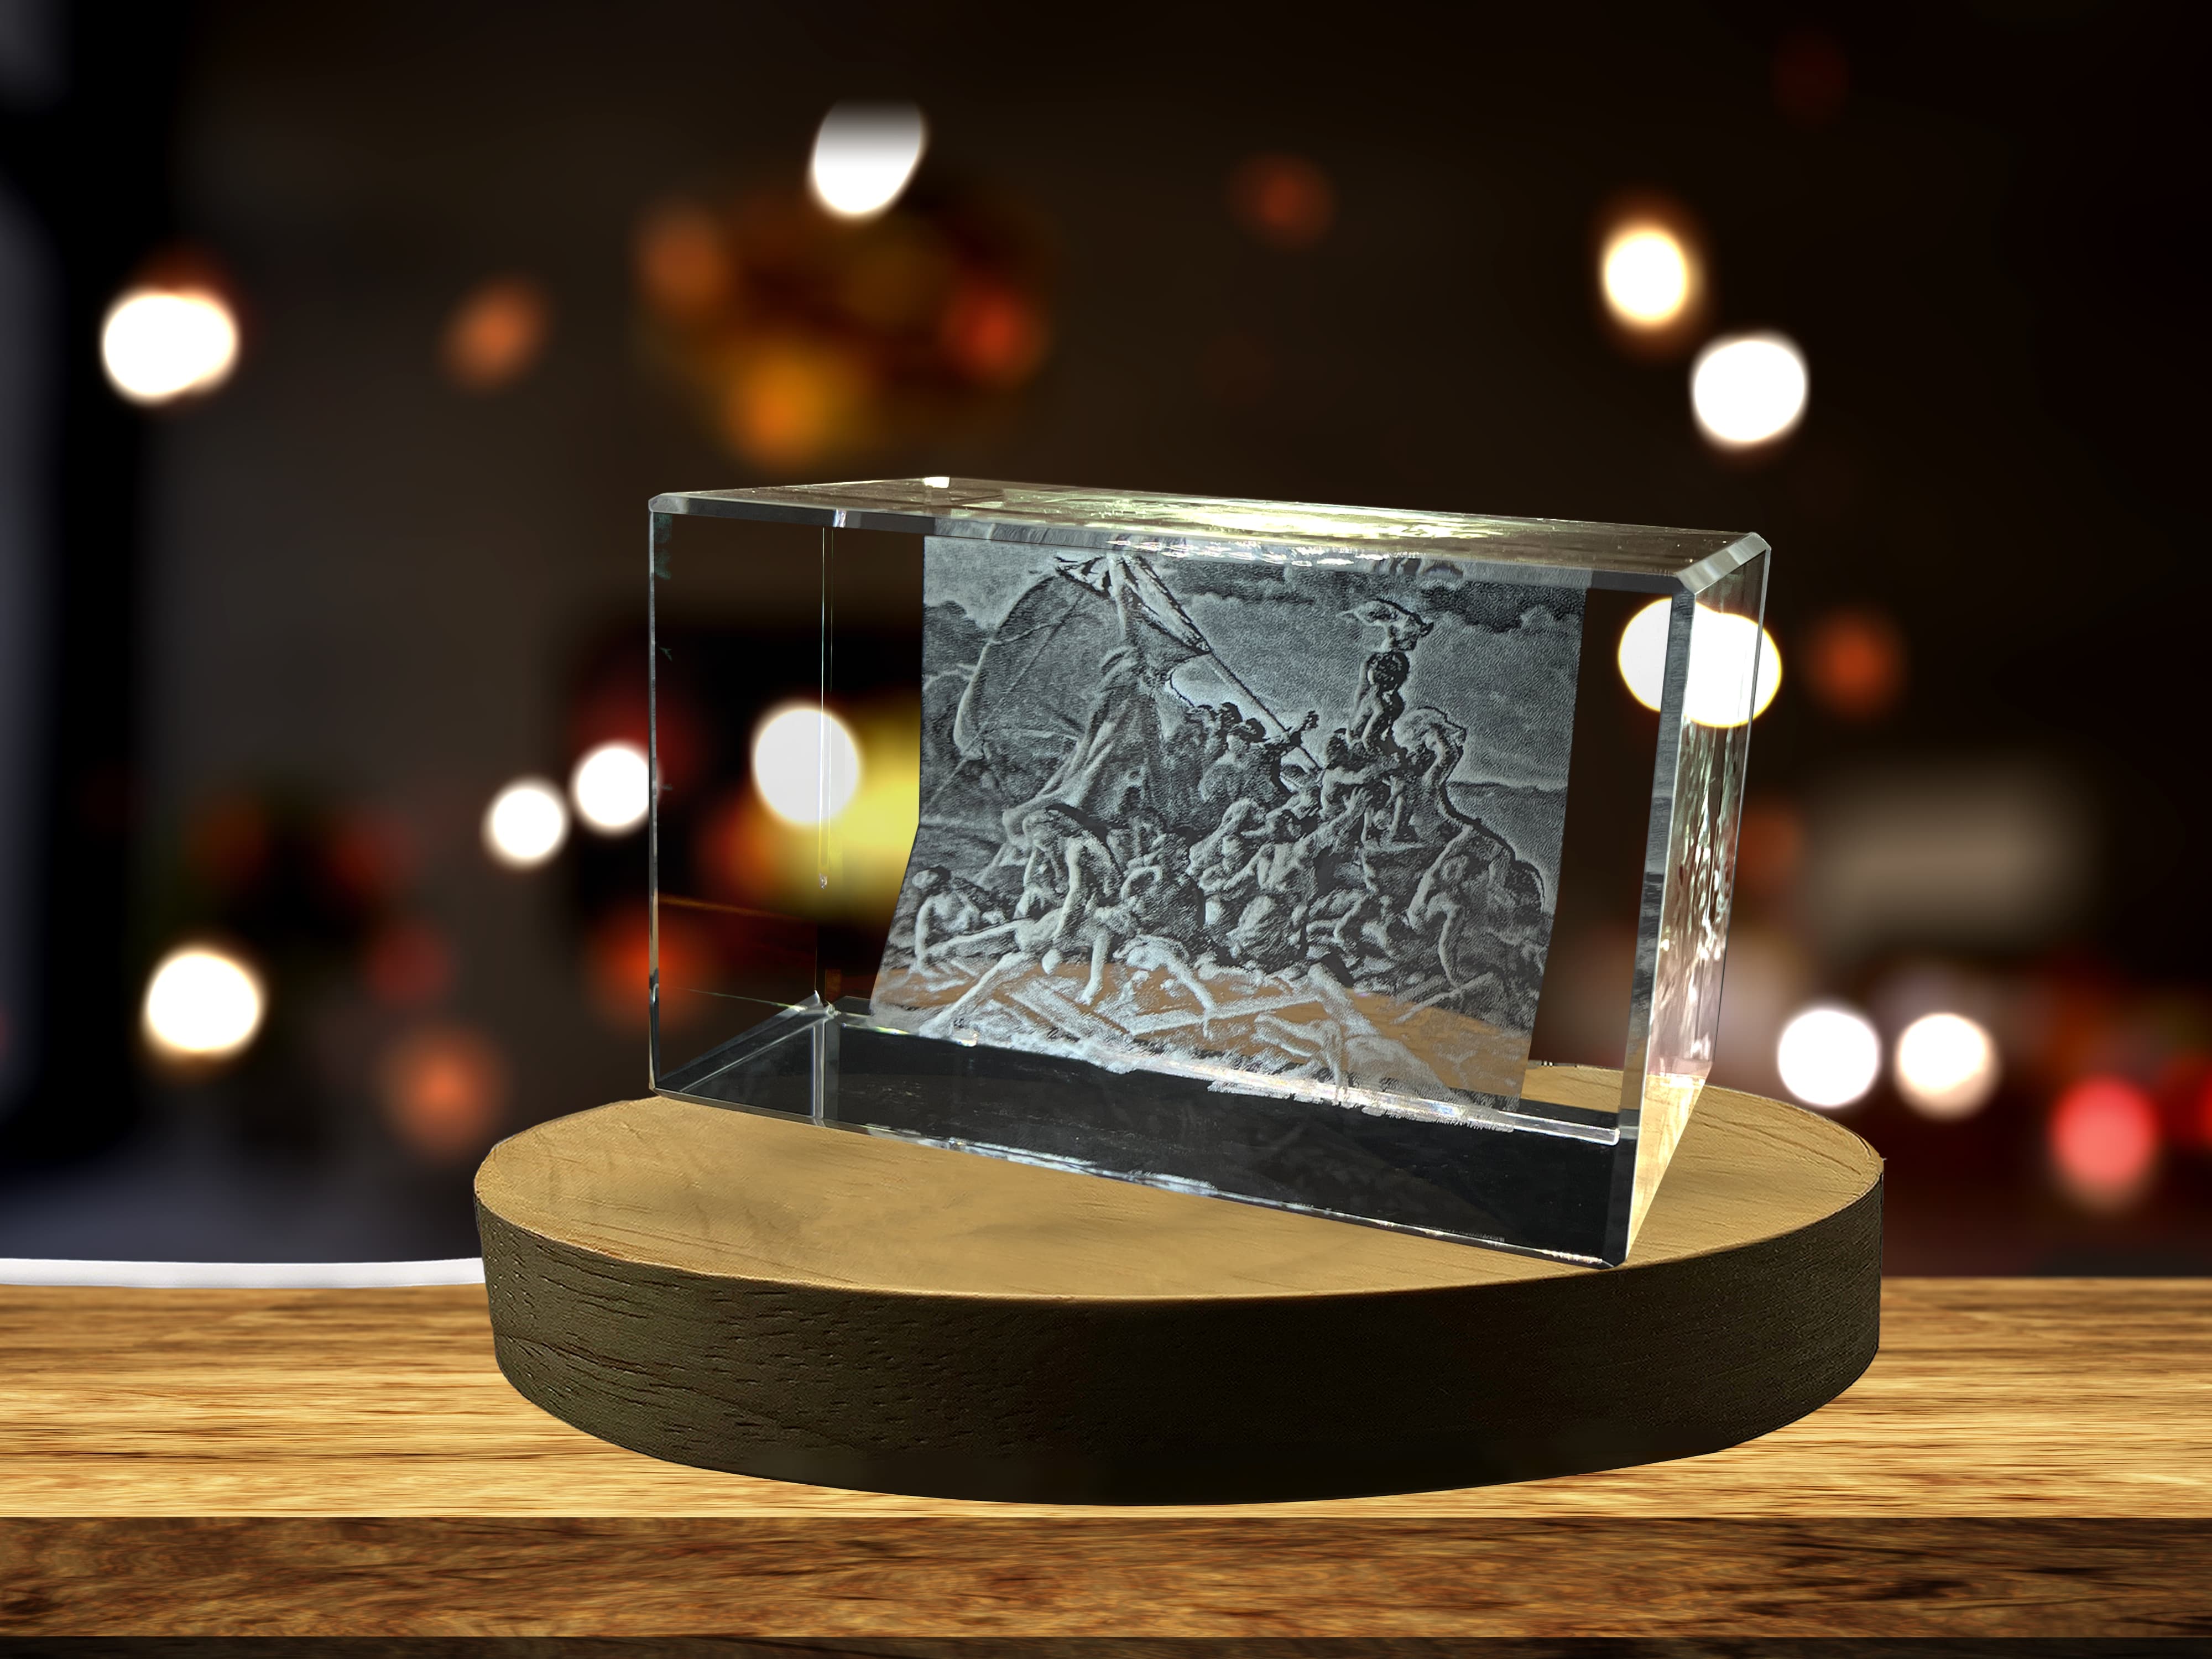 The Raft of the Medusa 3D Engraved Crystal Keepsake/Gift/Decor/Collectible/Souvenir A&B Crystal Collection